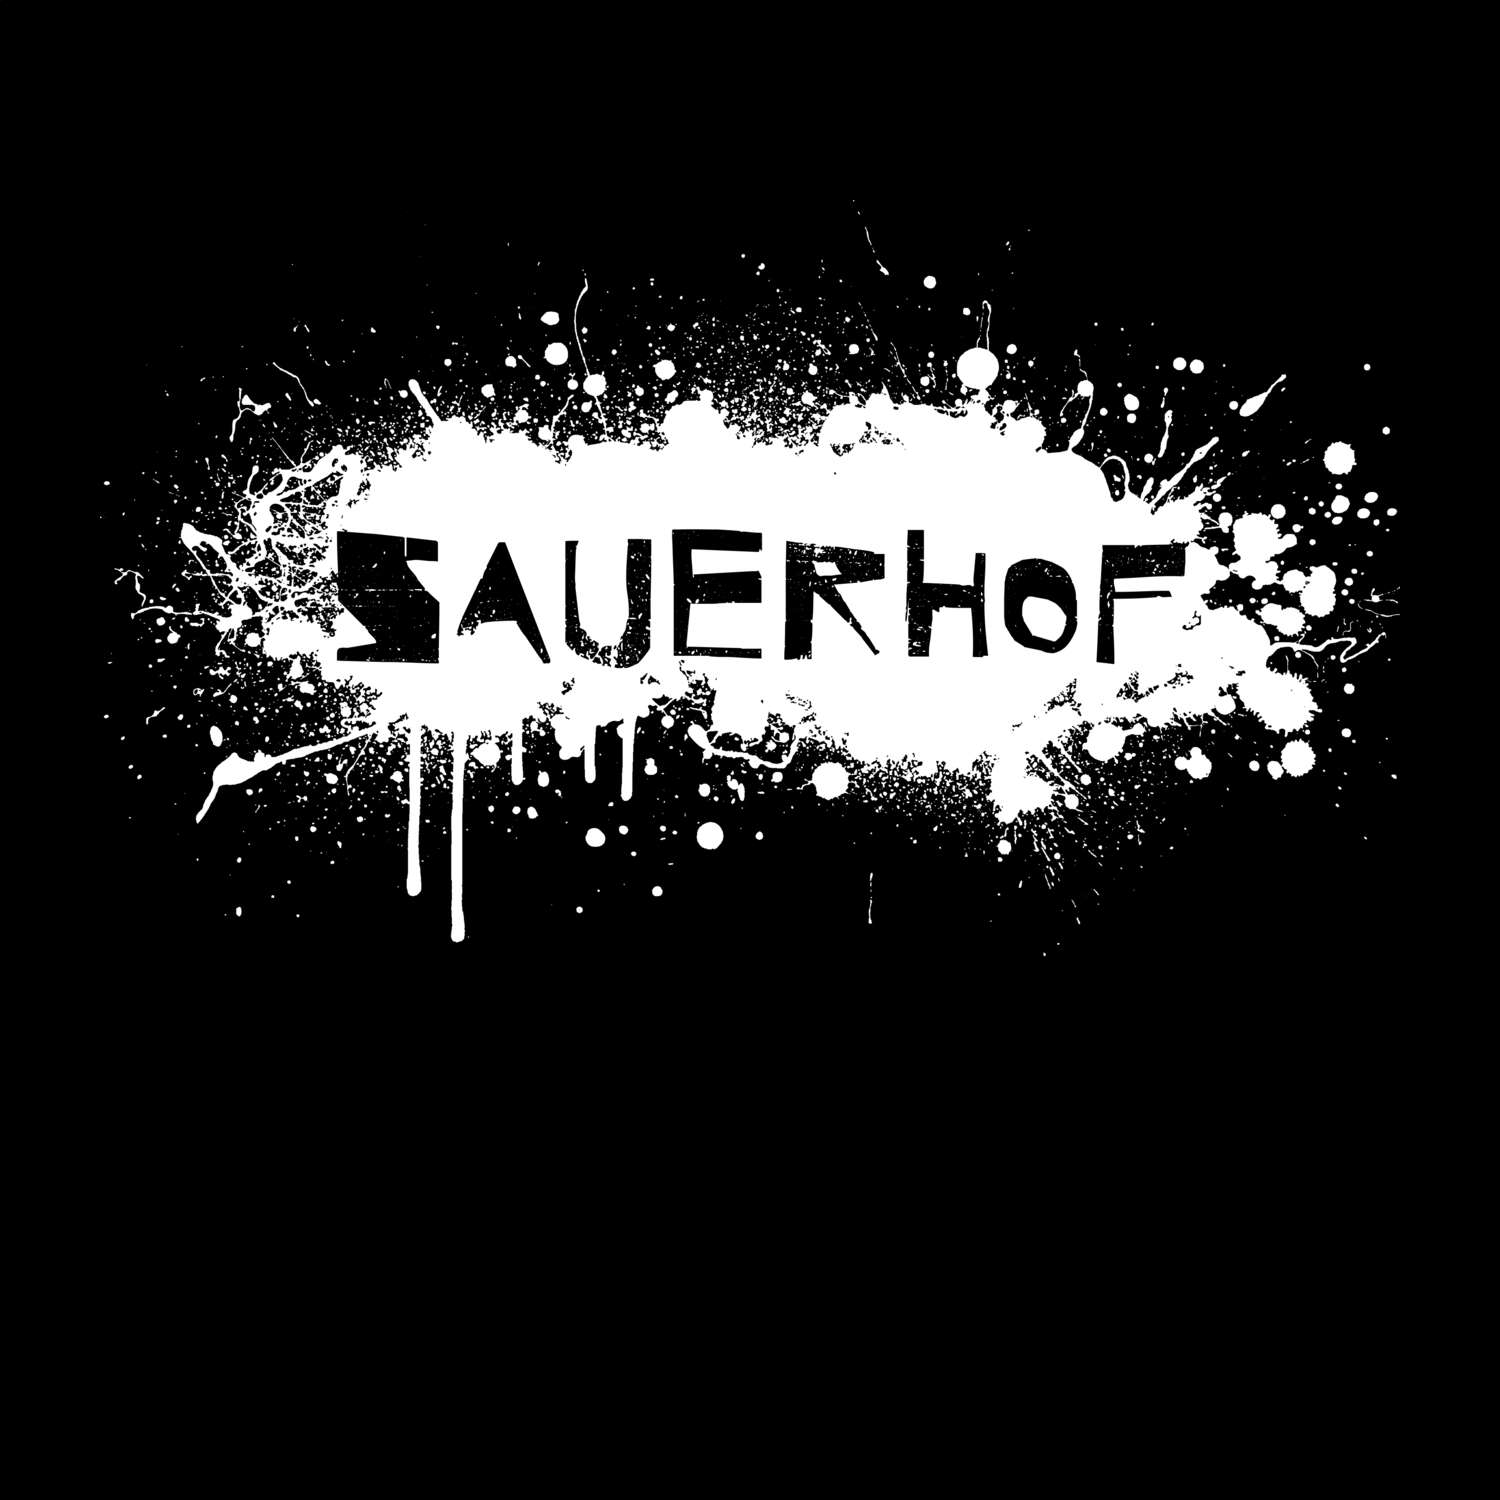 Sauerhof T-Shirt »Paint Splash Punk«